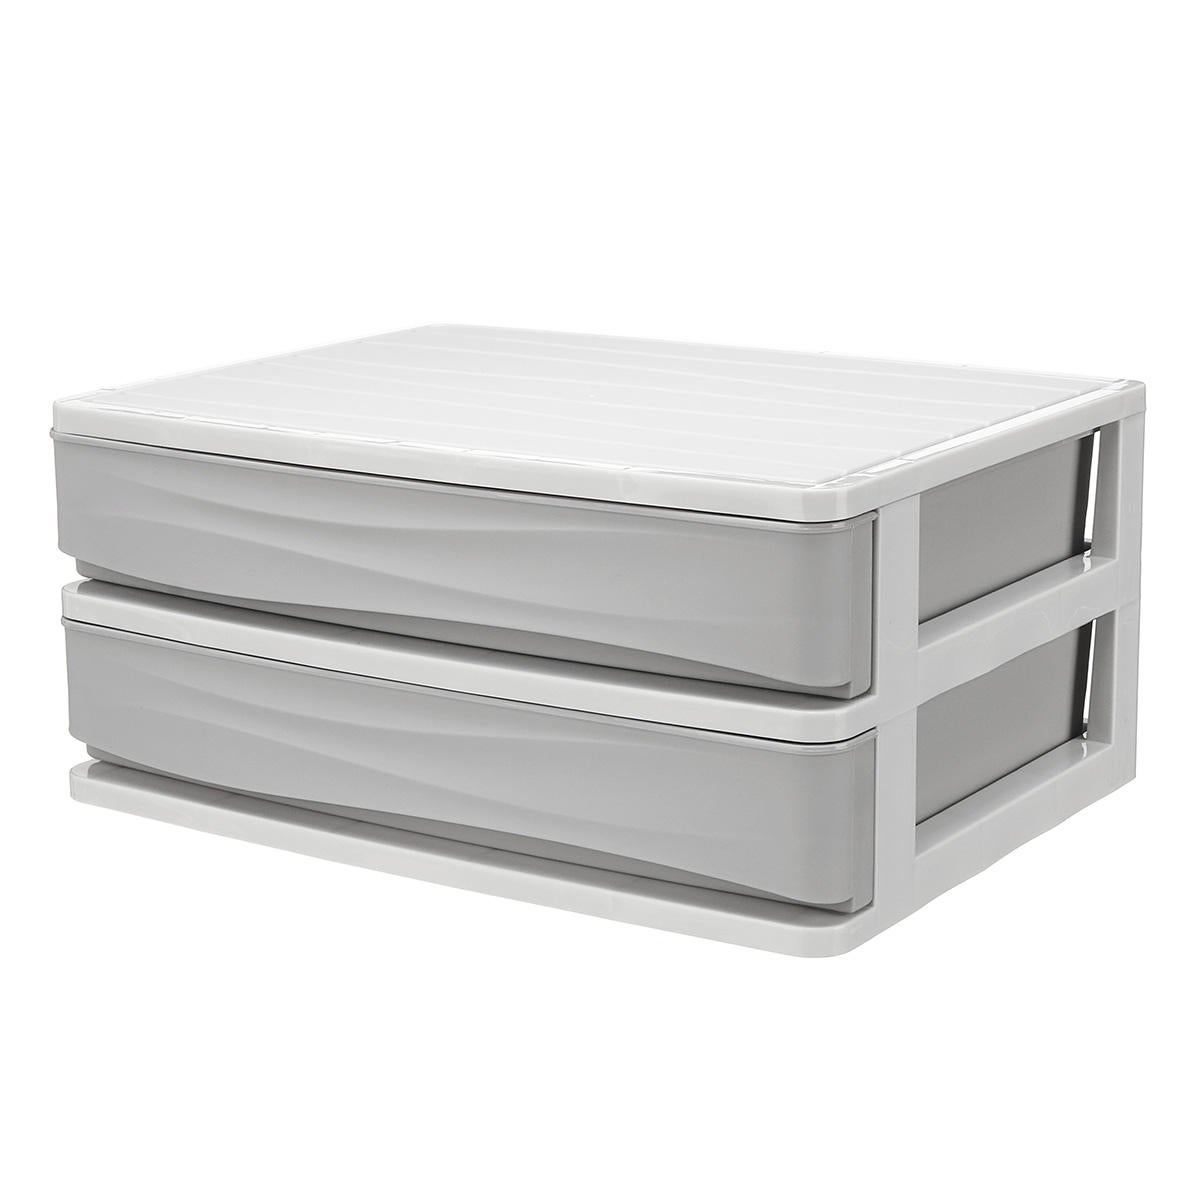 Double-Deck Comestics Makeup Storage Drawer Box Saving Space Desktop Organizer Gray